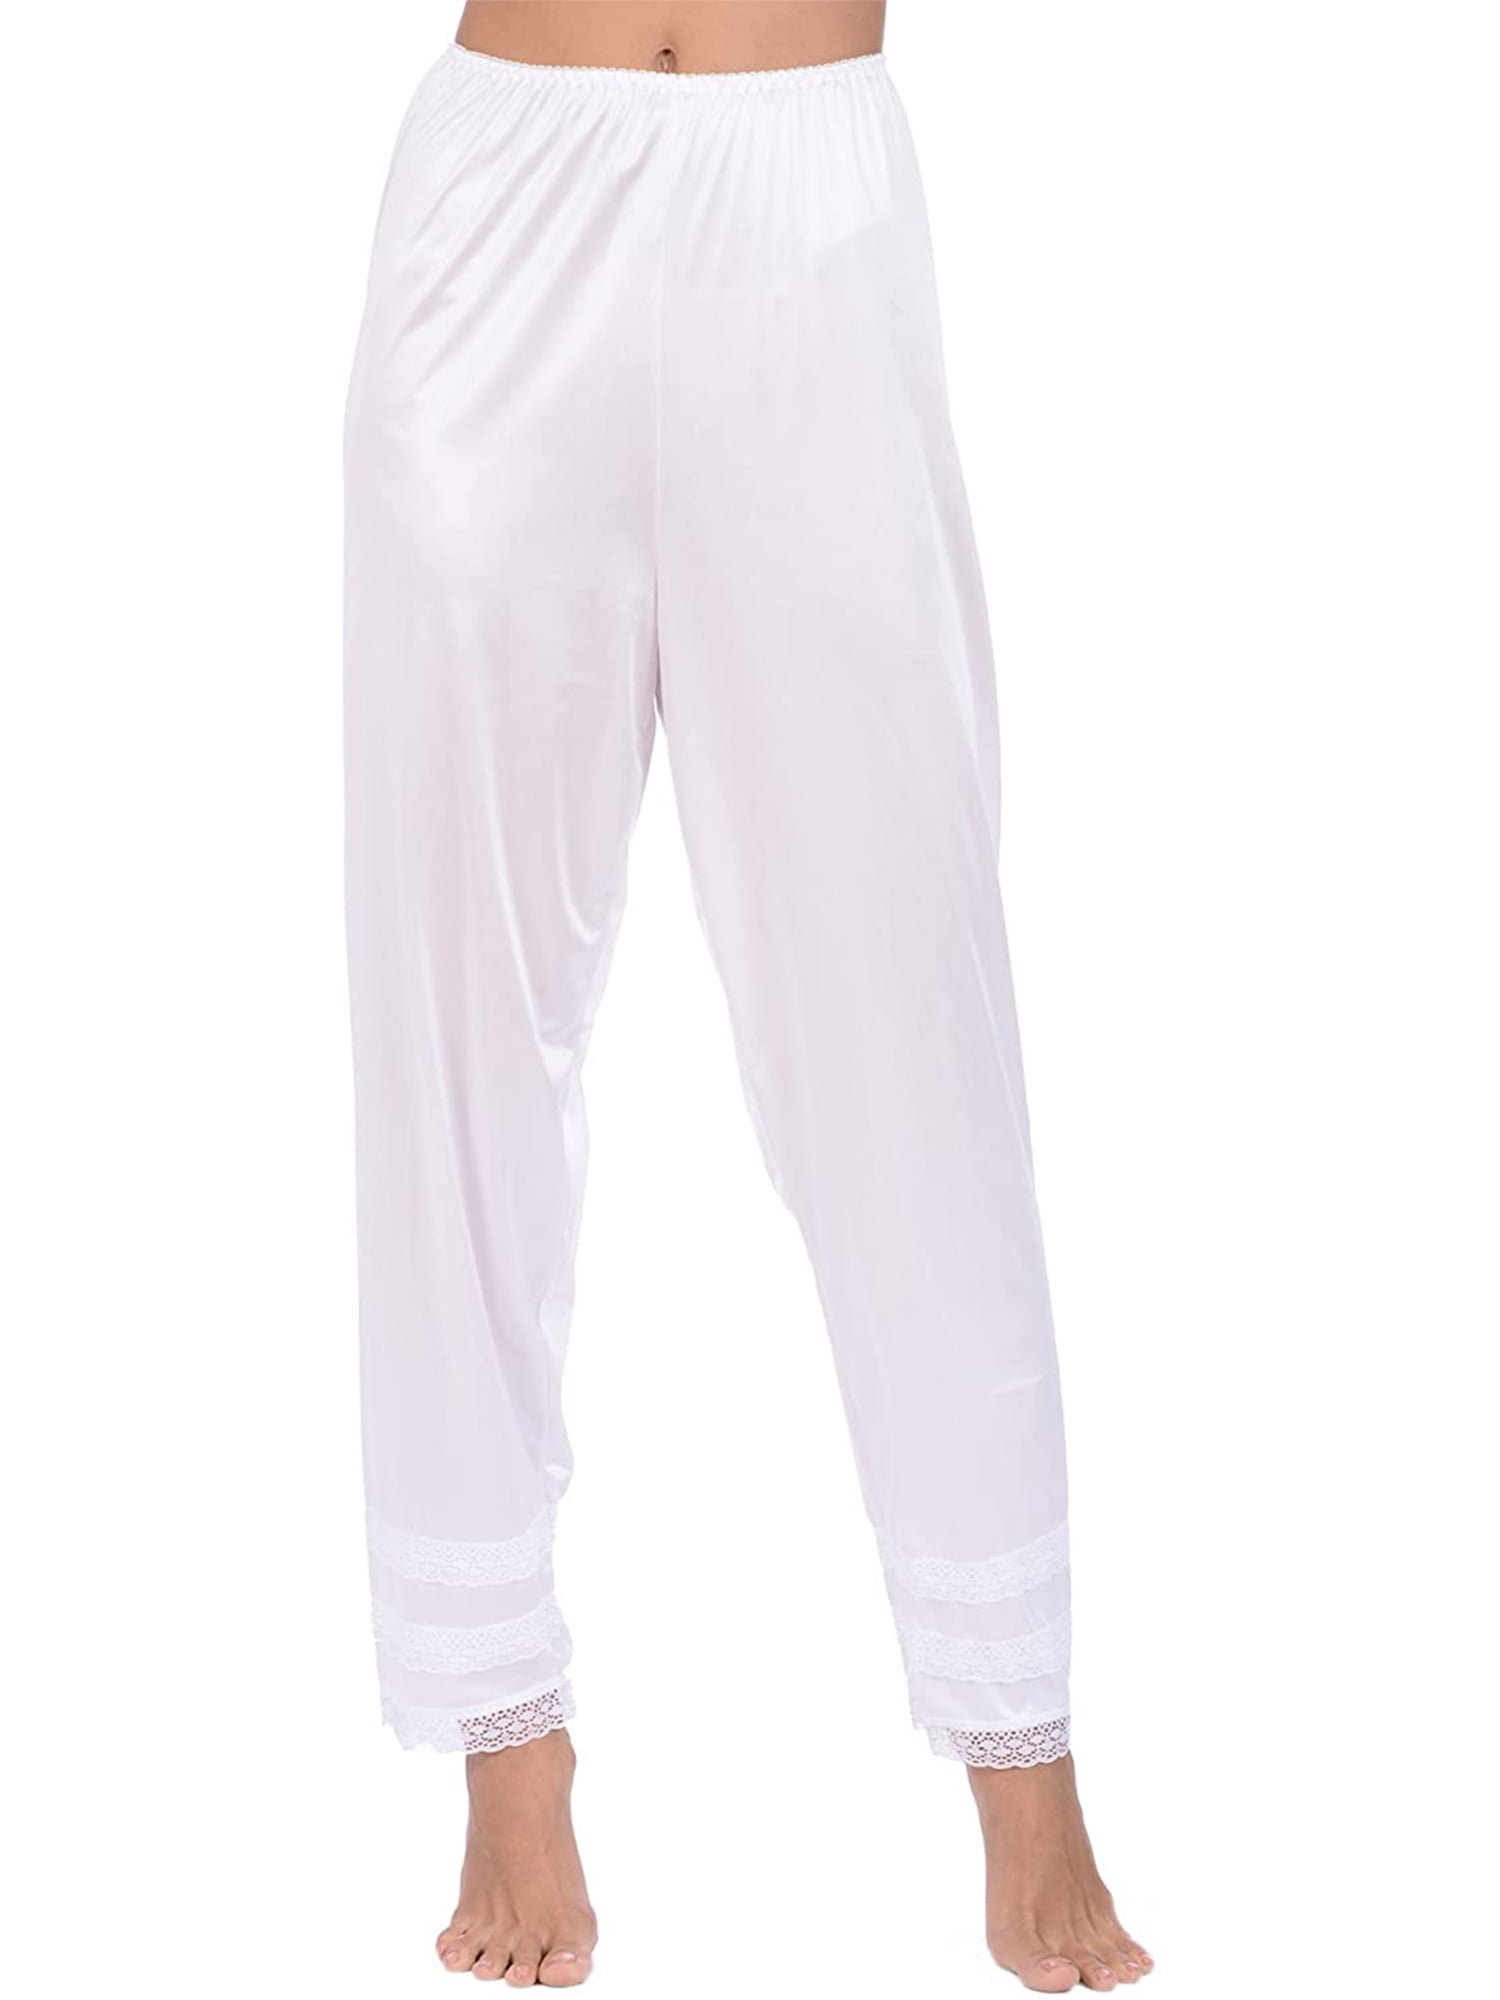 Women's Satin Silk Sleepwear Slip Liner Long Pajamas Pants Nightwear ...